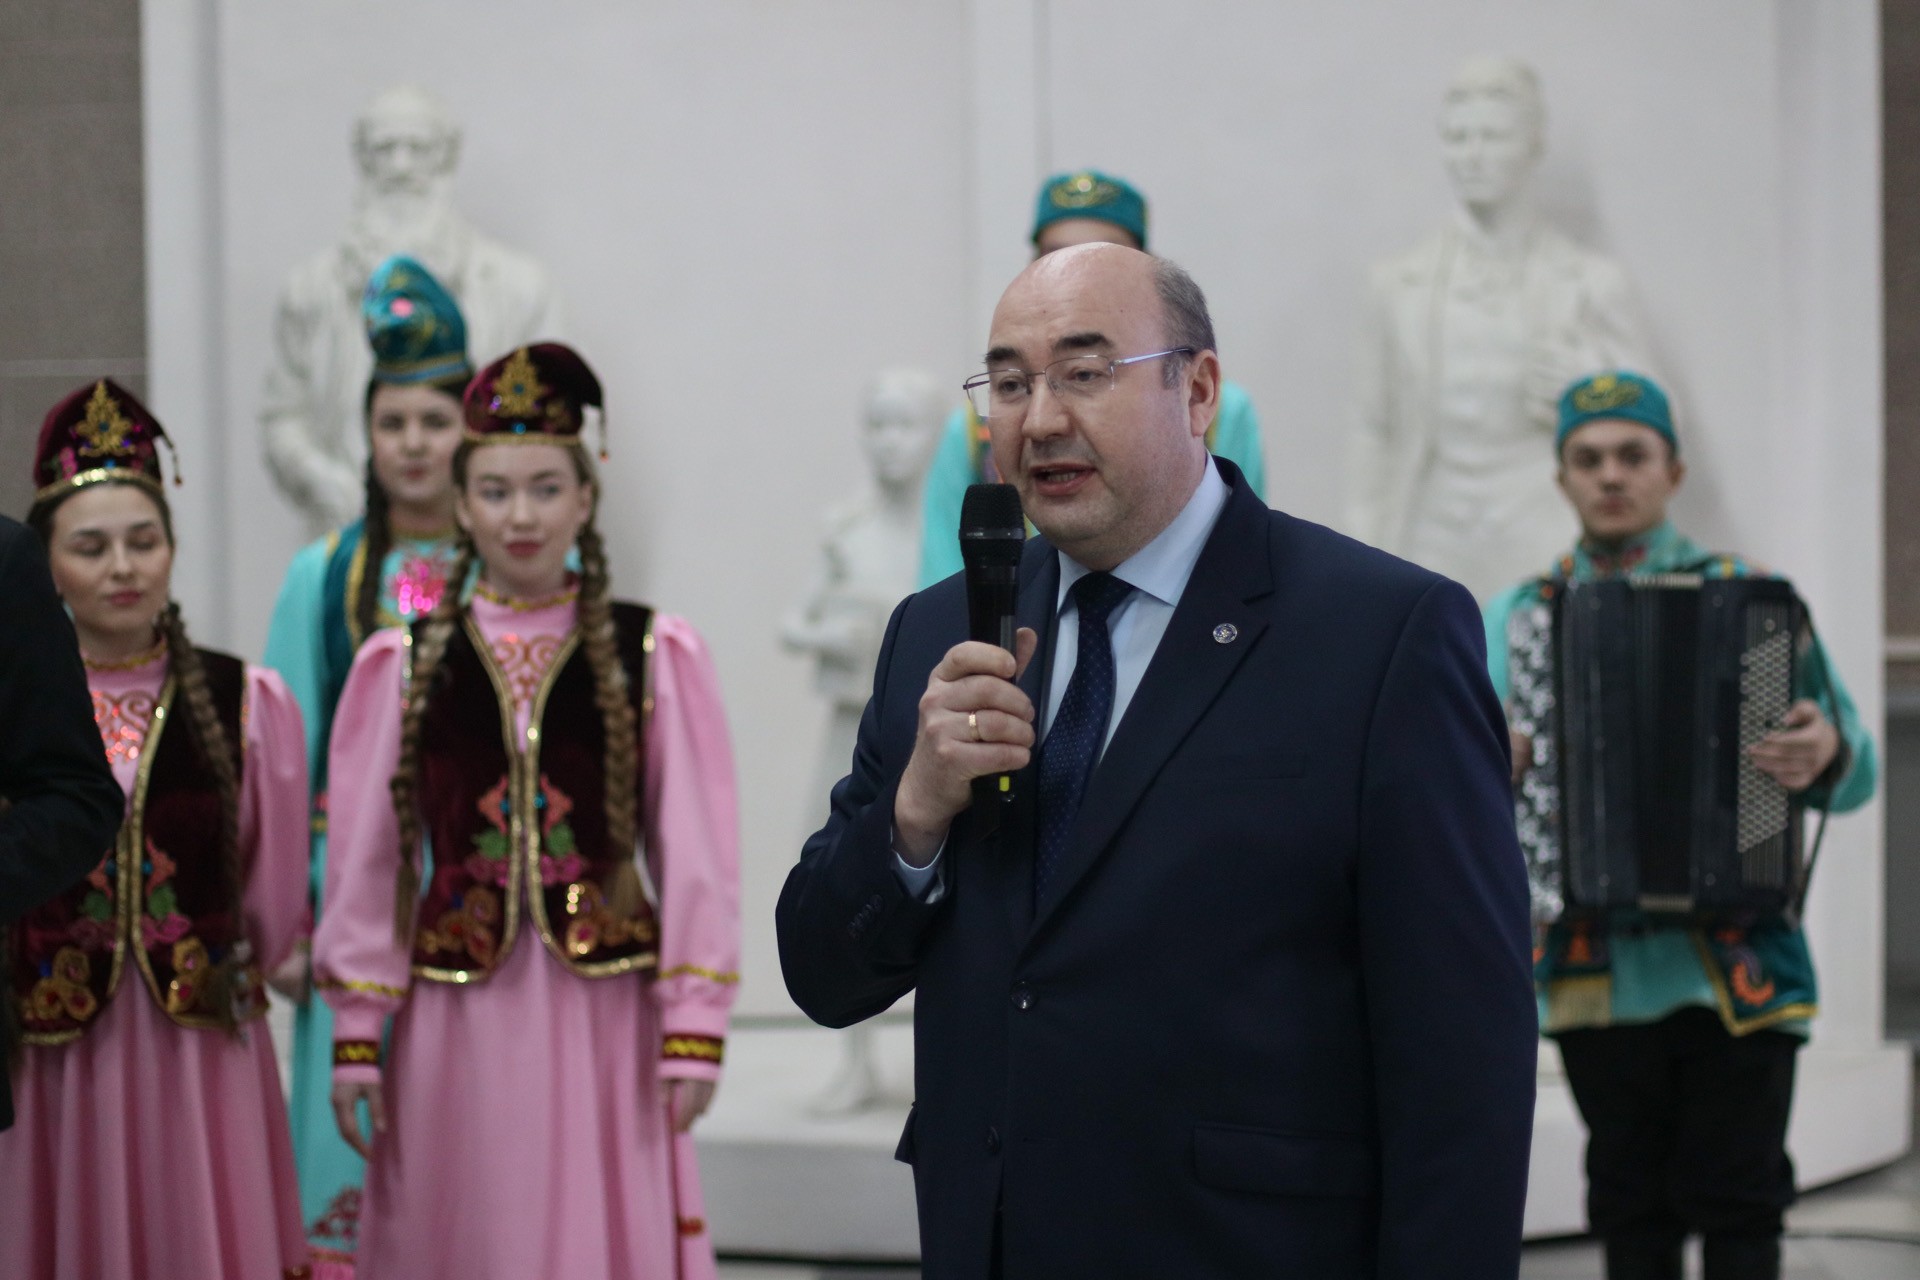 University offers free Tatar language courses